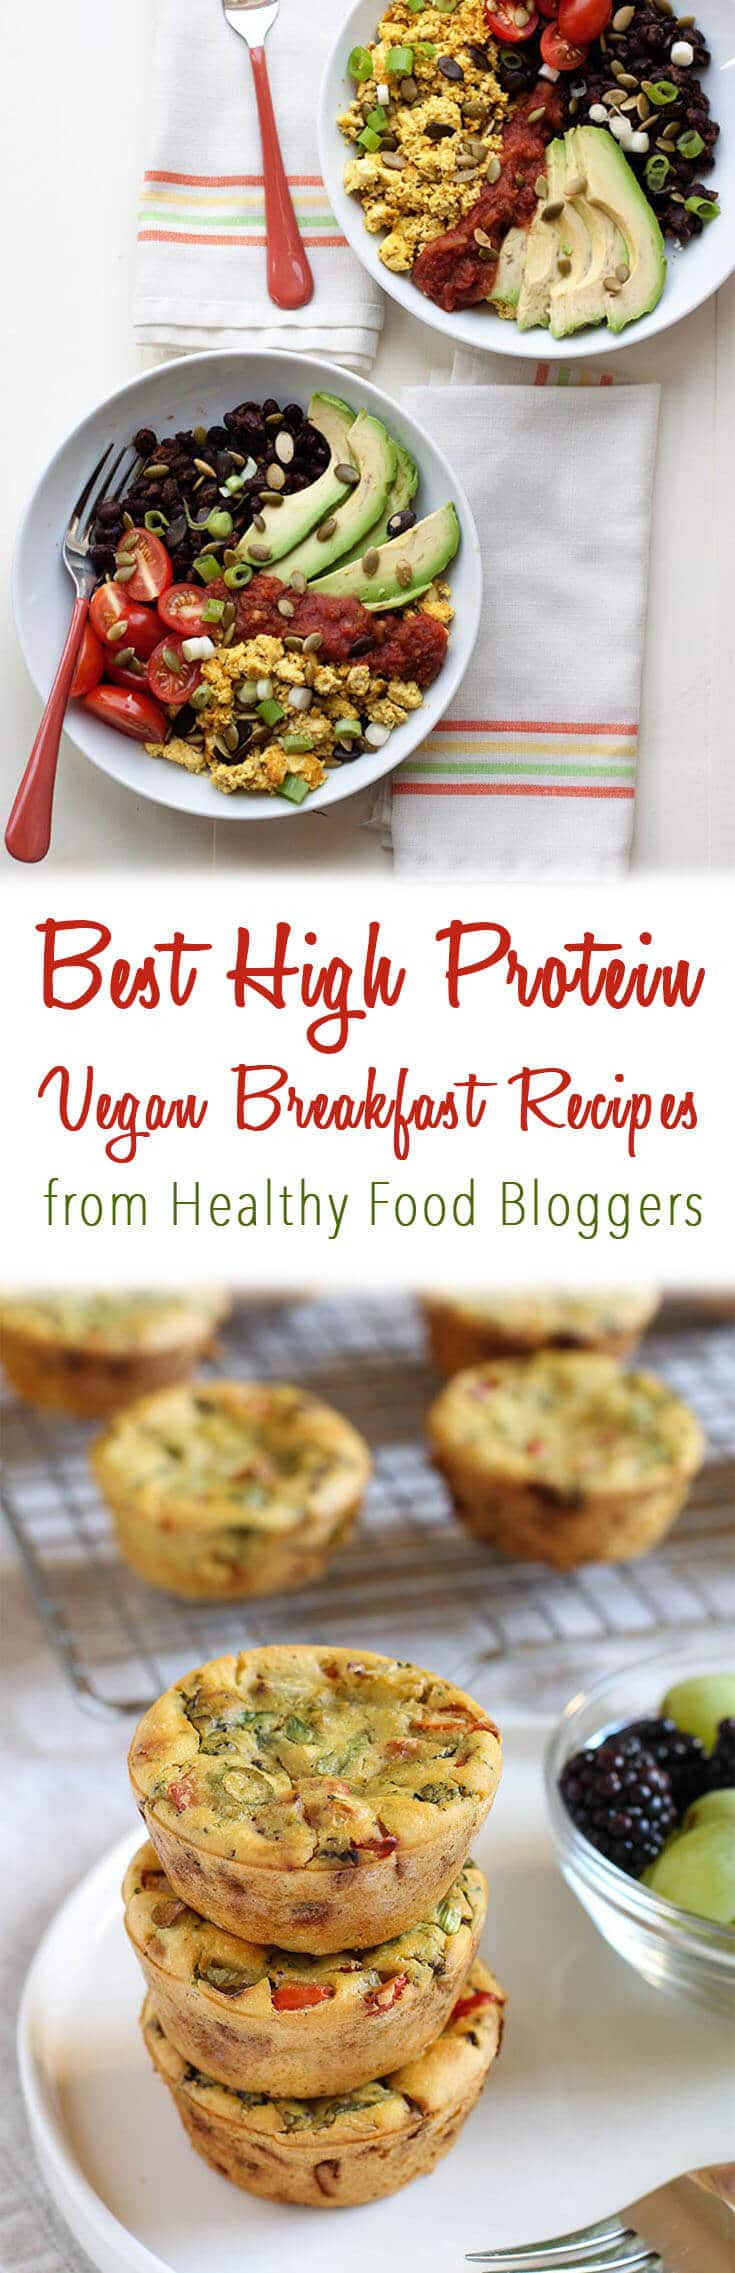 Vegan Breakfast Recipes Healthy
 Best High Protein Vegan Breakfast Recipes from Healthy